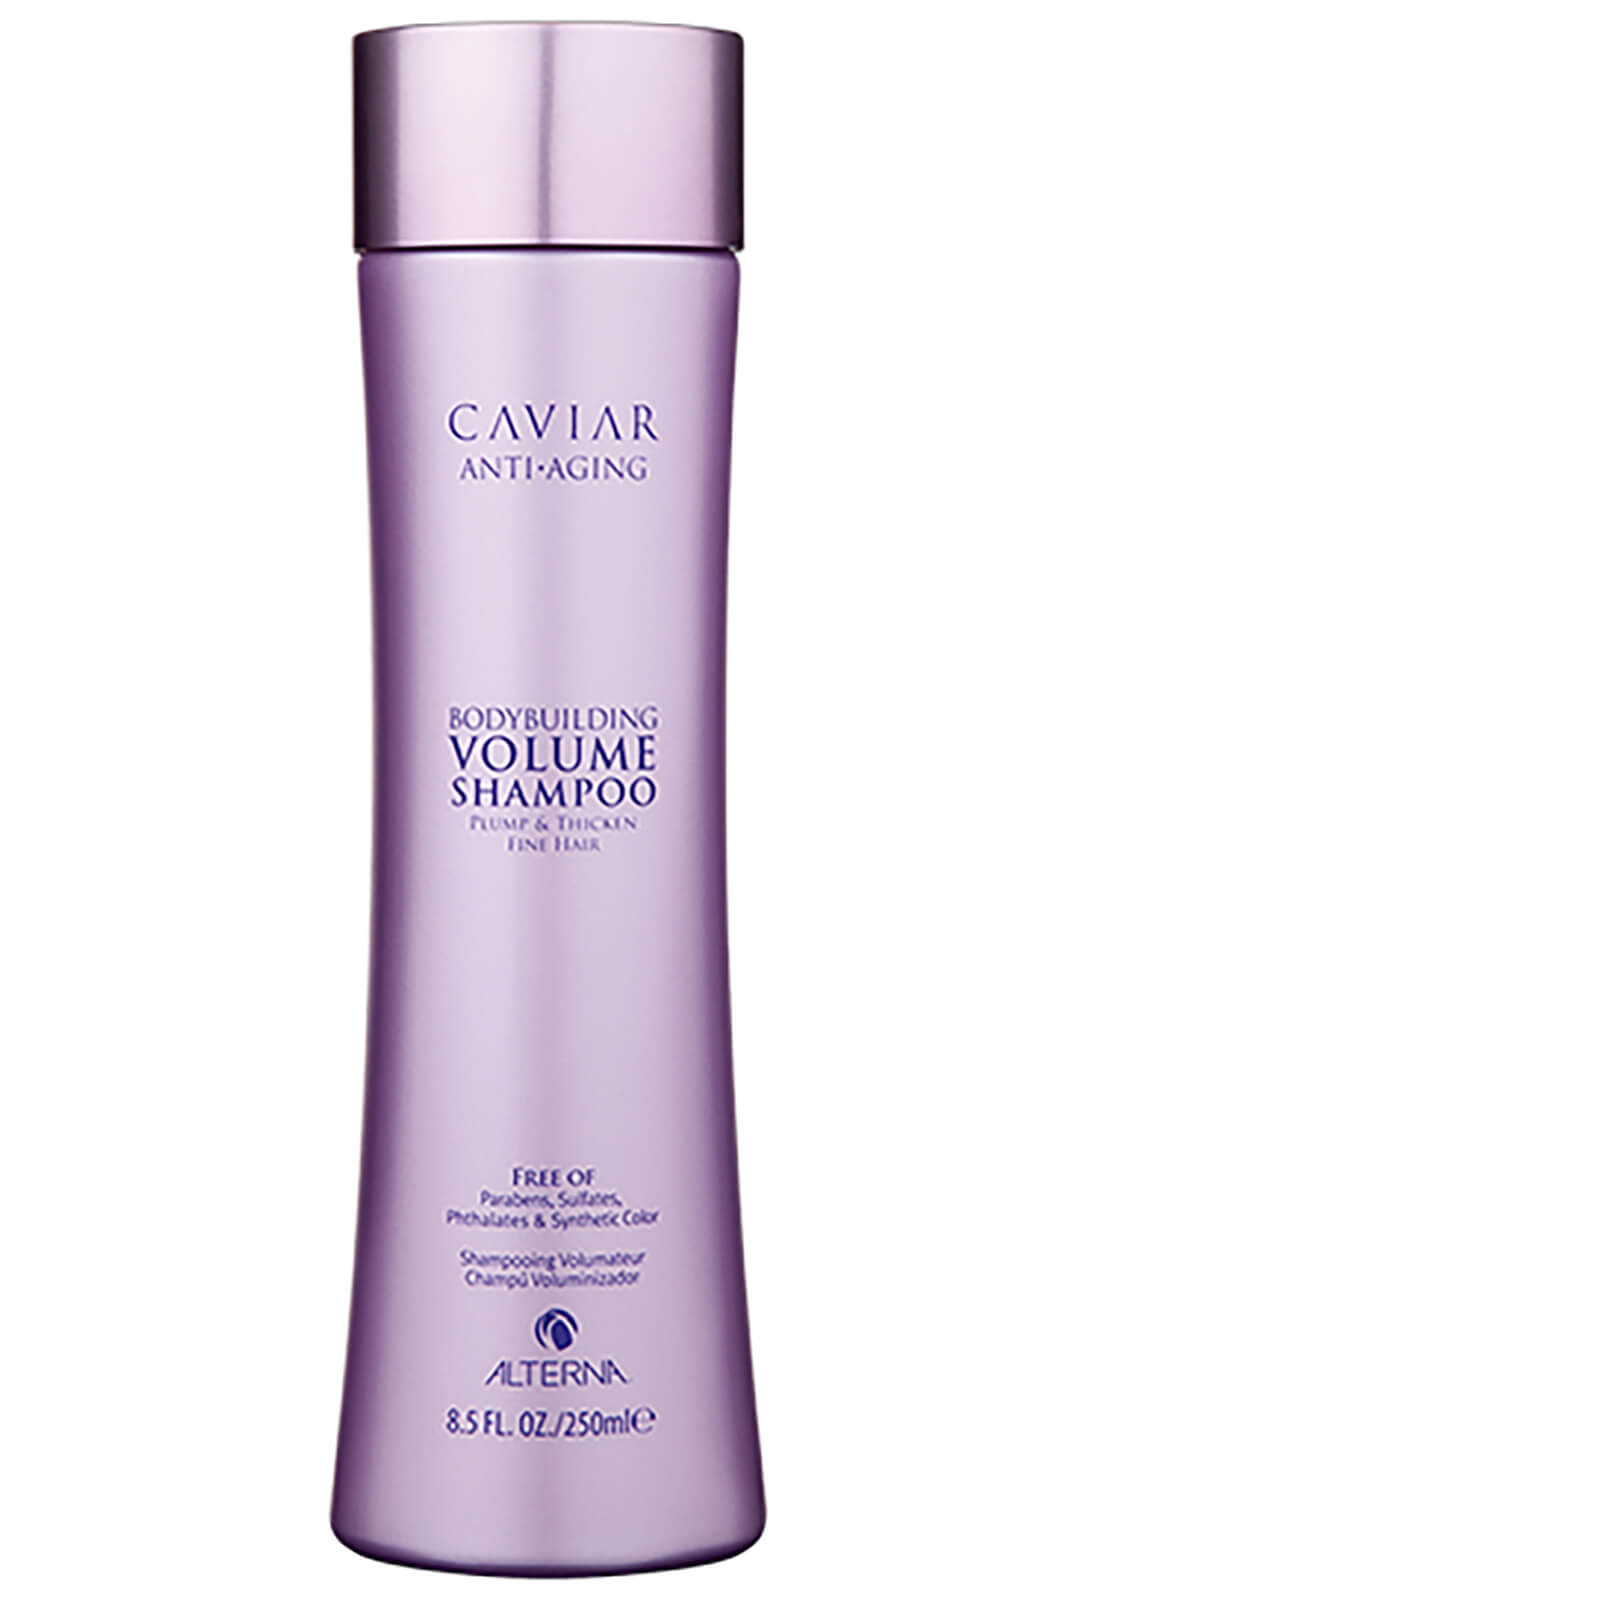 Alterna Caviar Volume Shampoo 250ml with Infinite Color Hold Vibrancy Serum 15ml